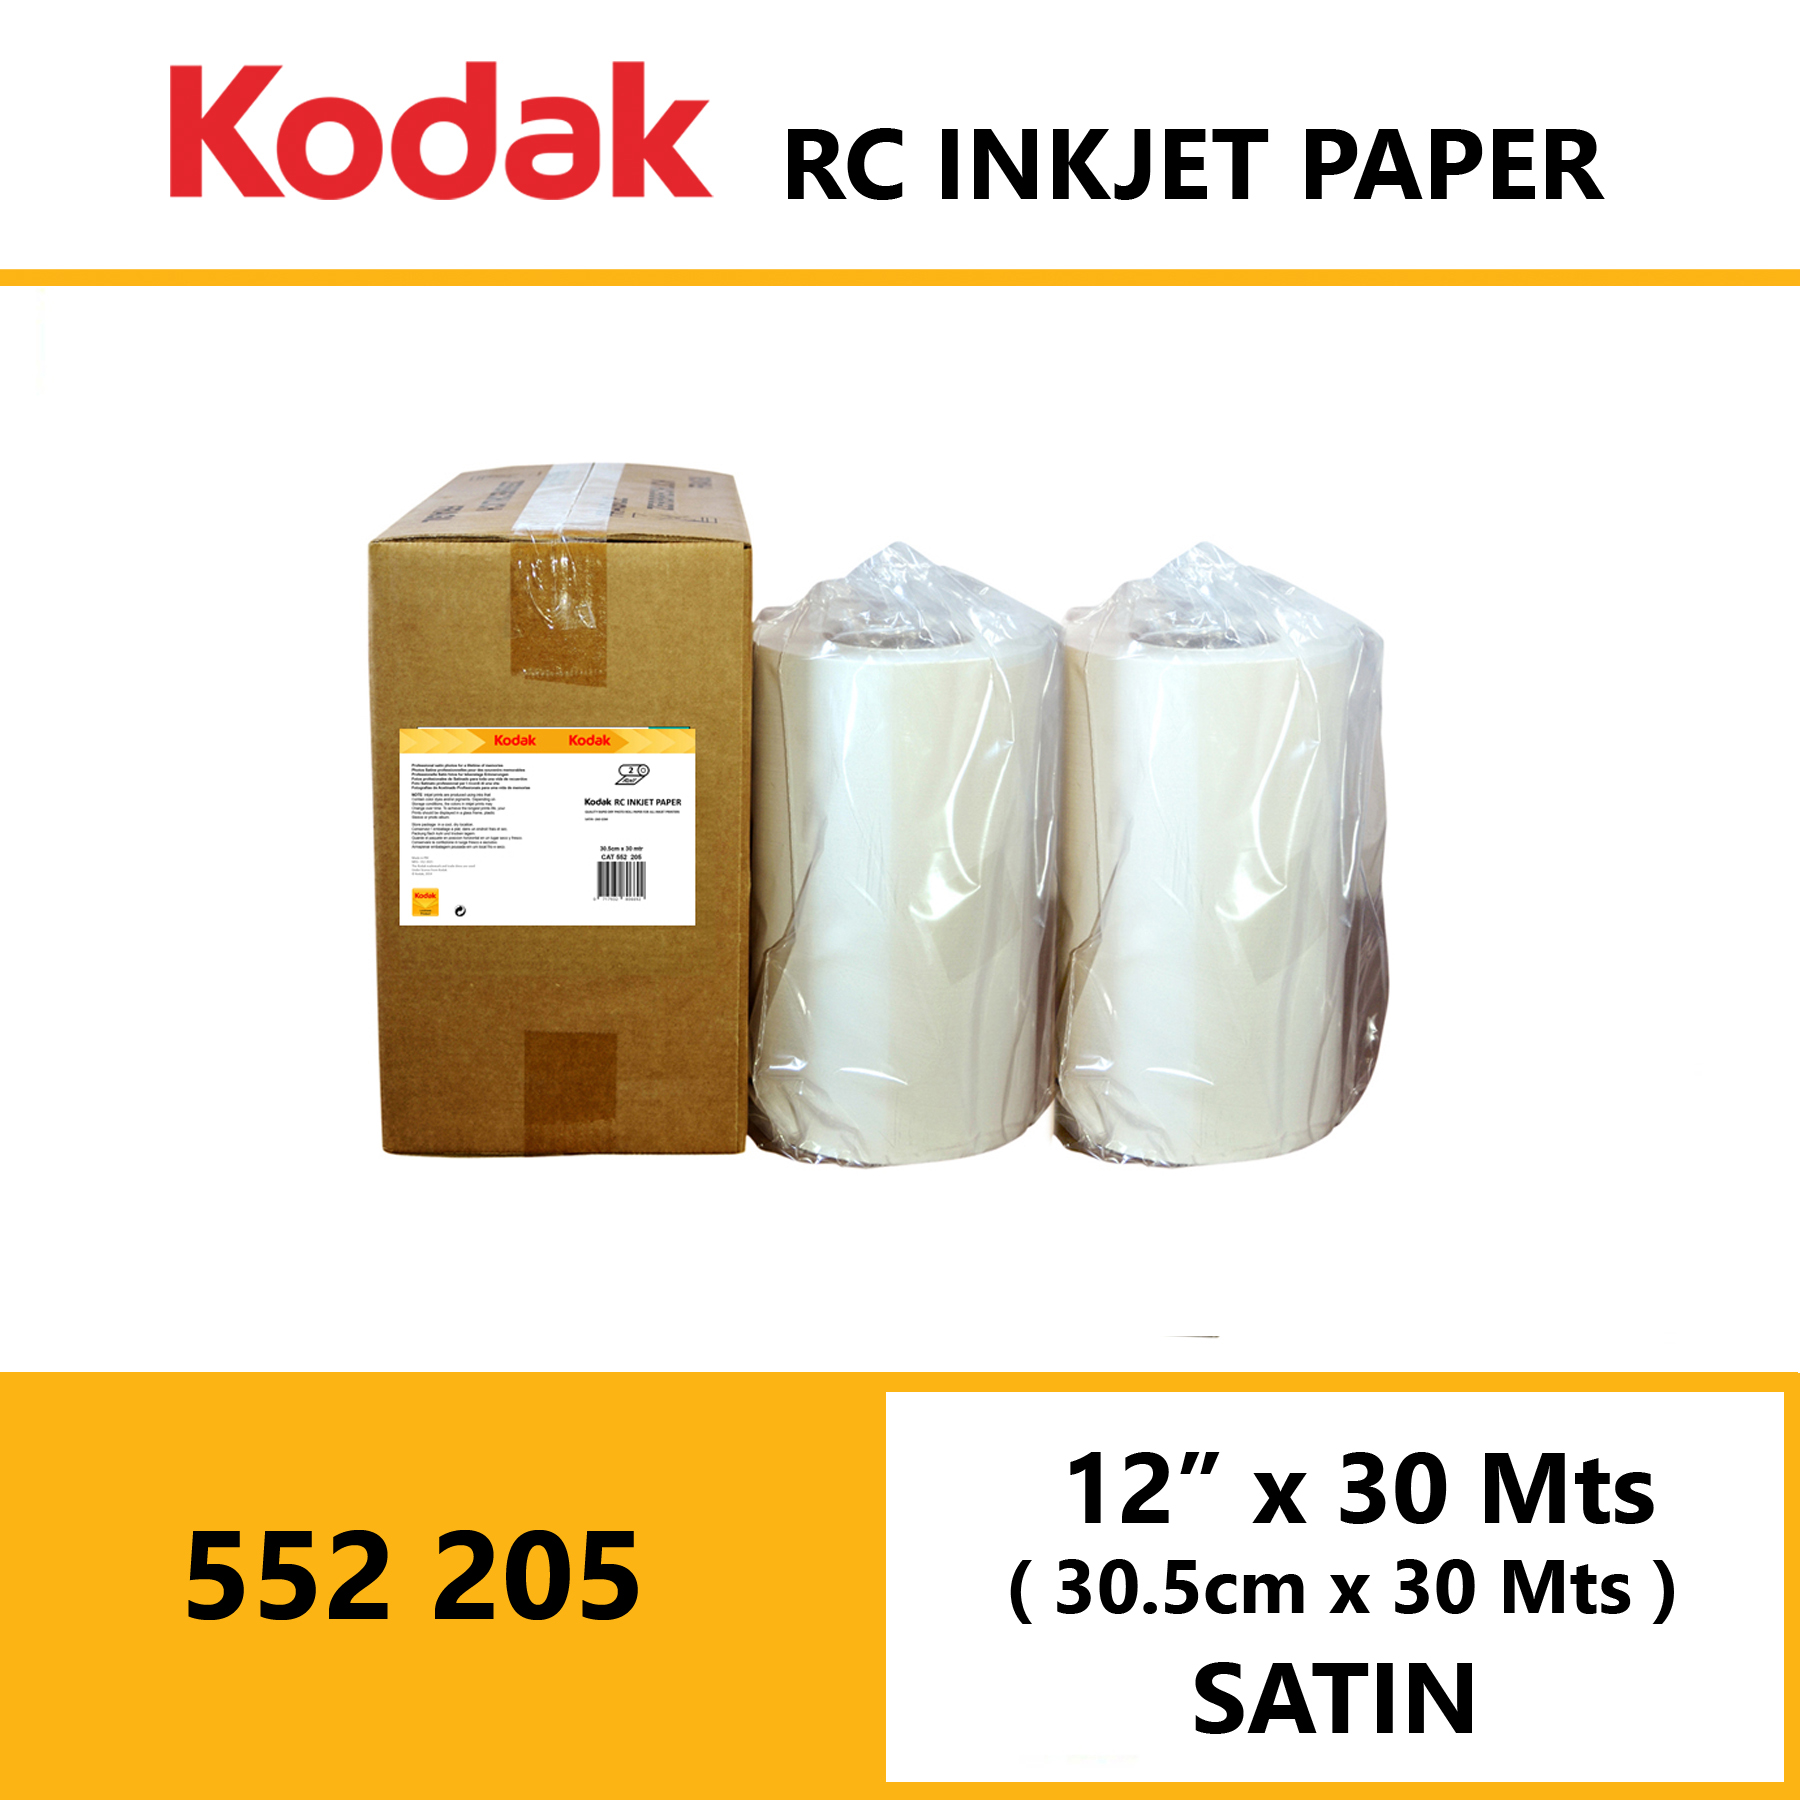 Kodak Inkjet RC Paper 12 ” x 30 Mtrs Satin